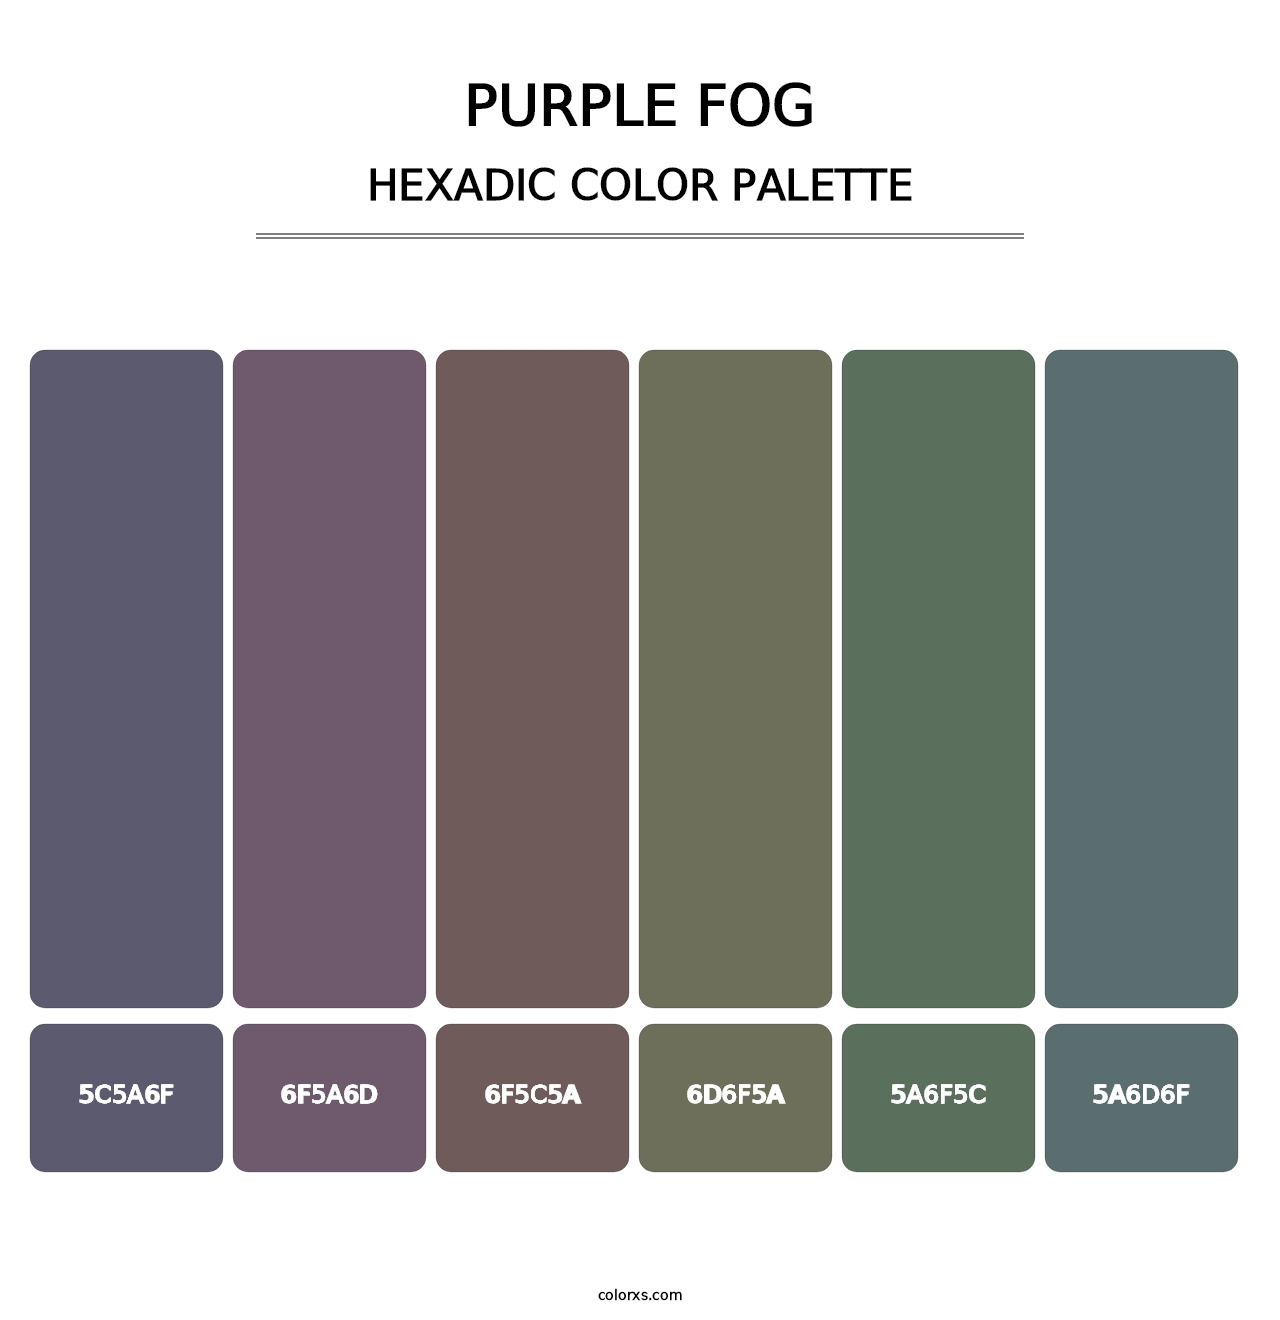 Purple Fog - Hexadic Color Palette